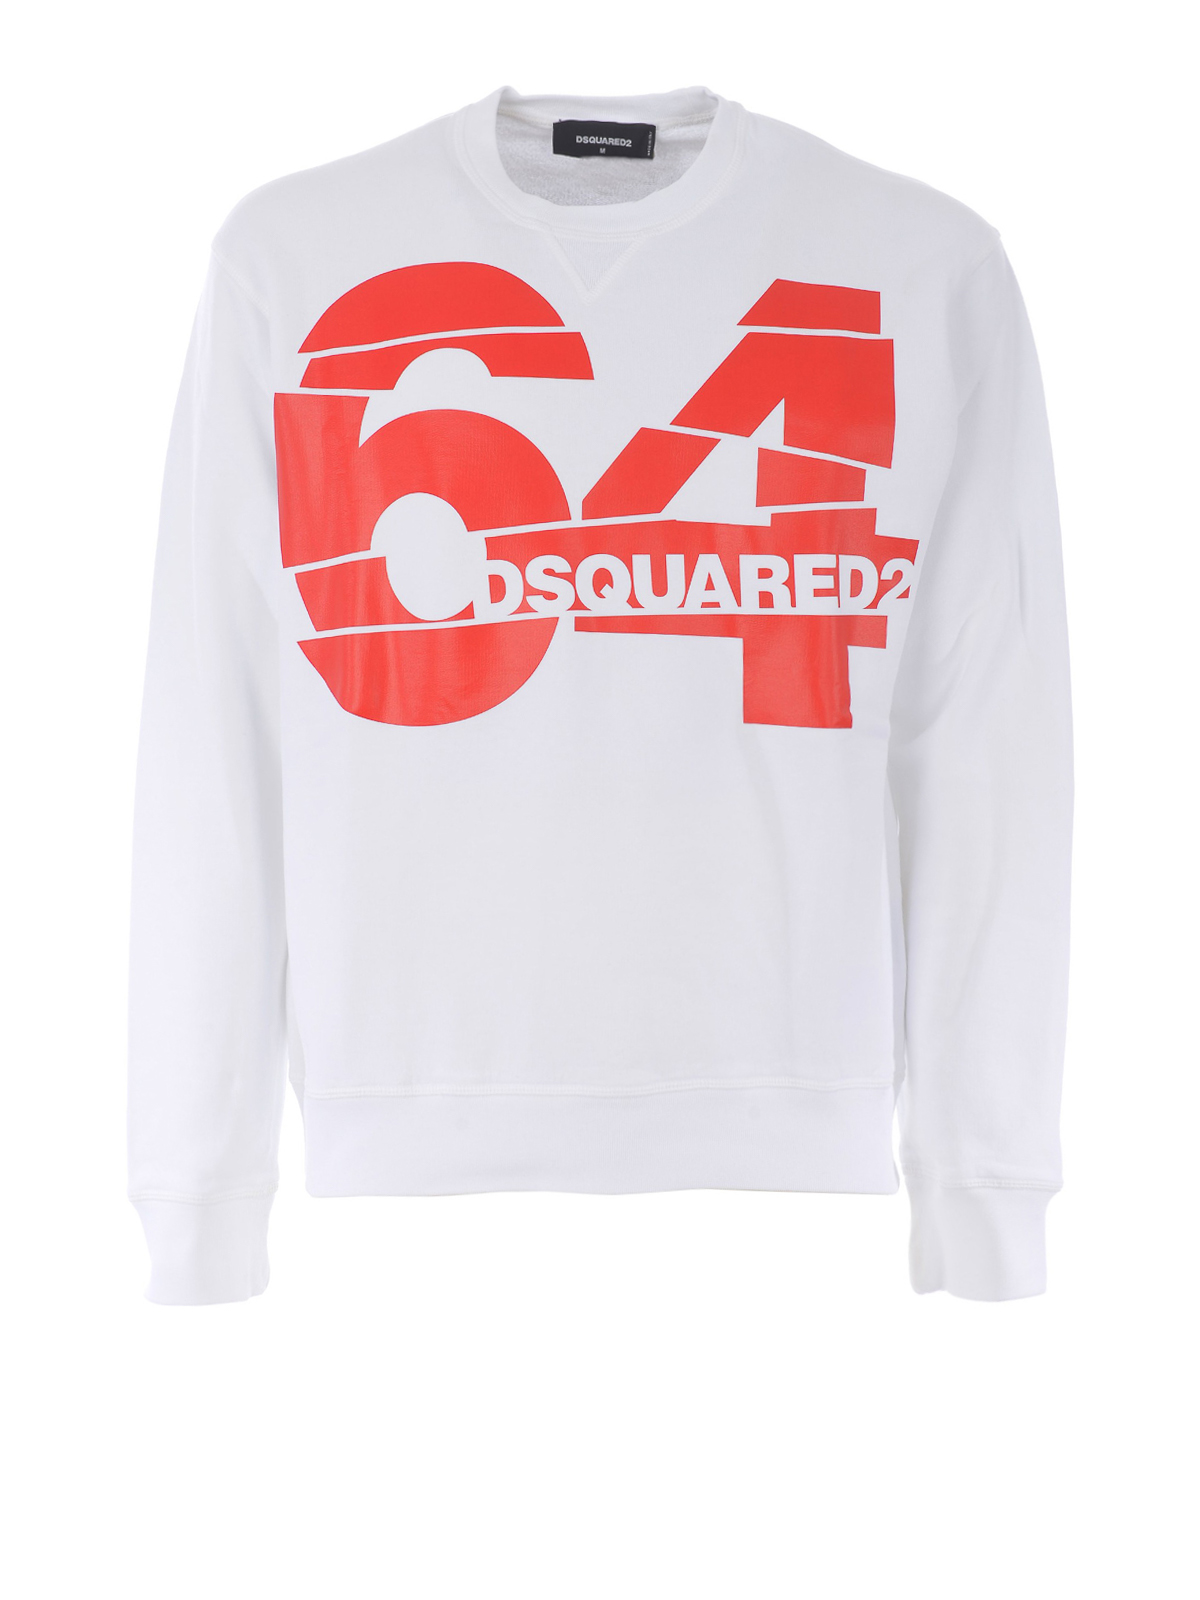 dsquared2 sweatshirt white